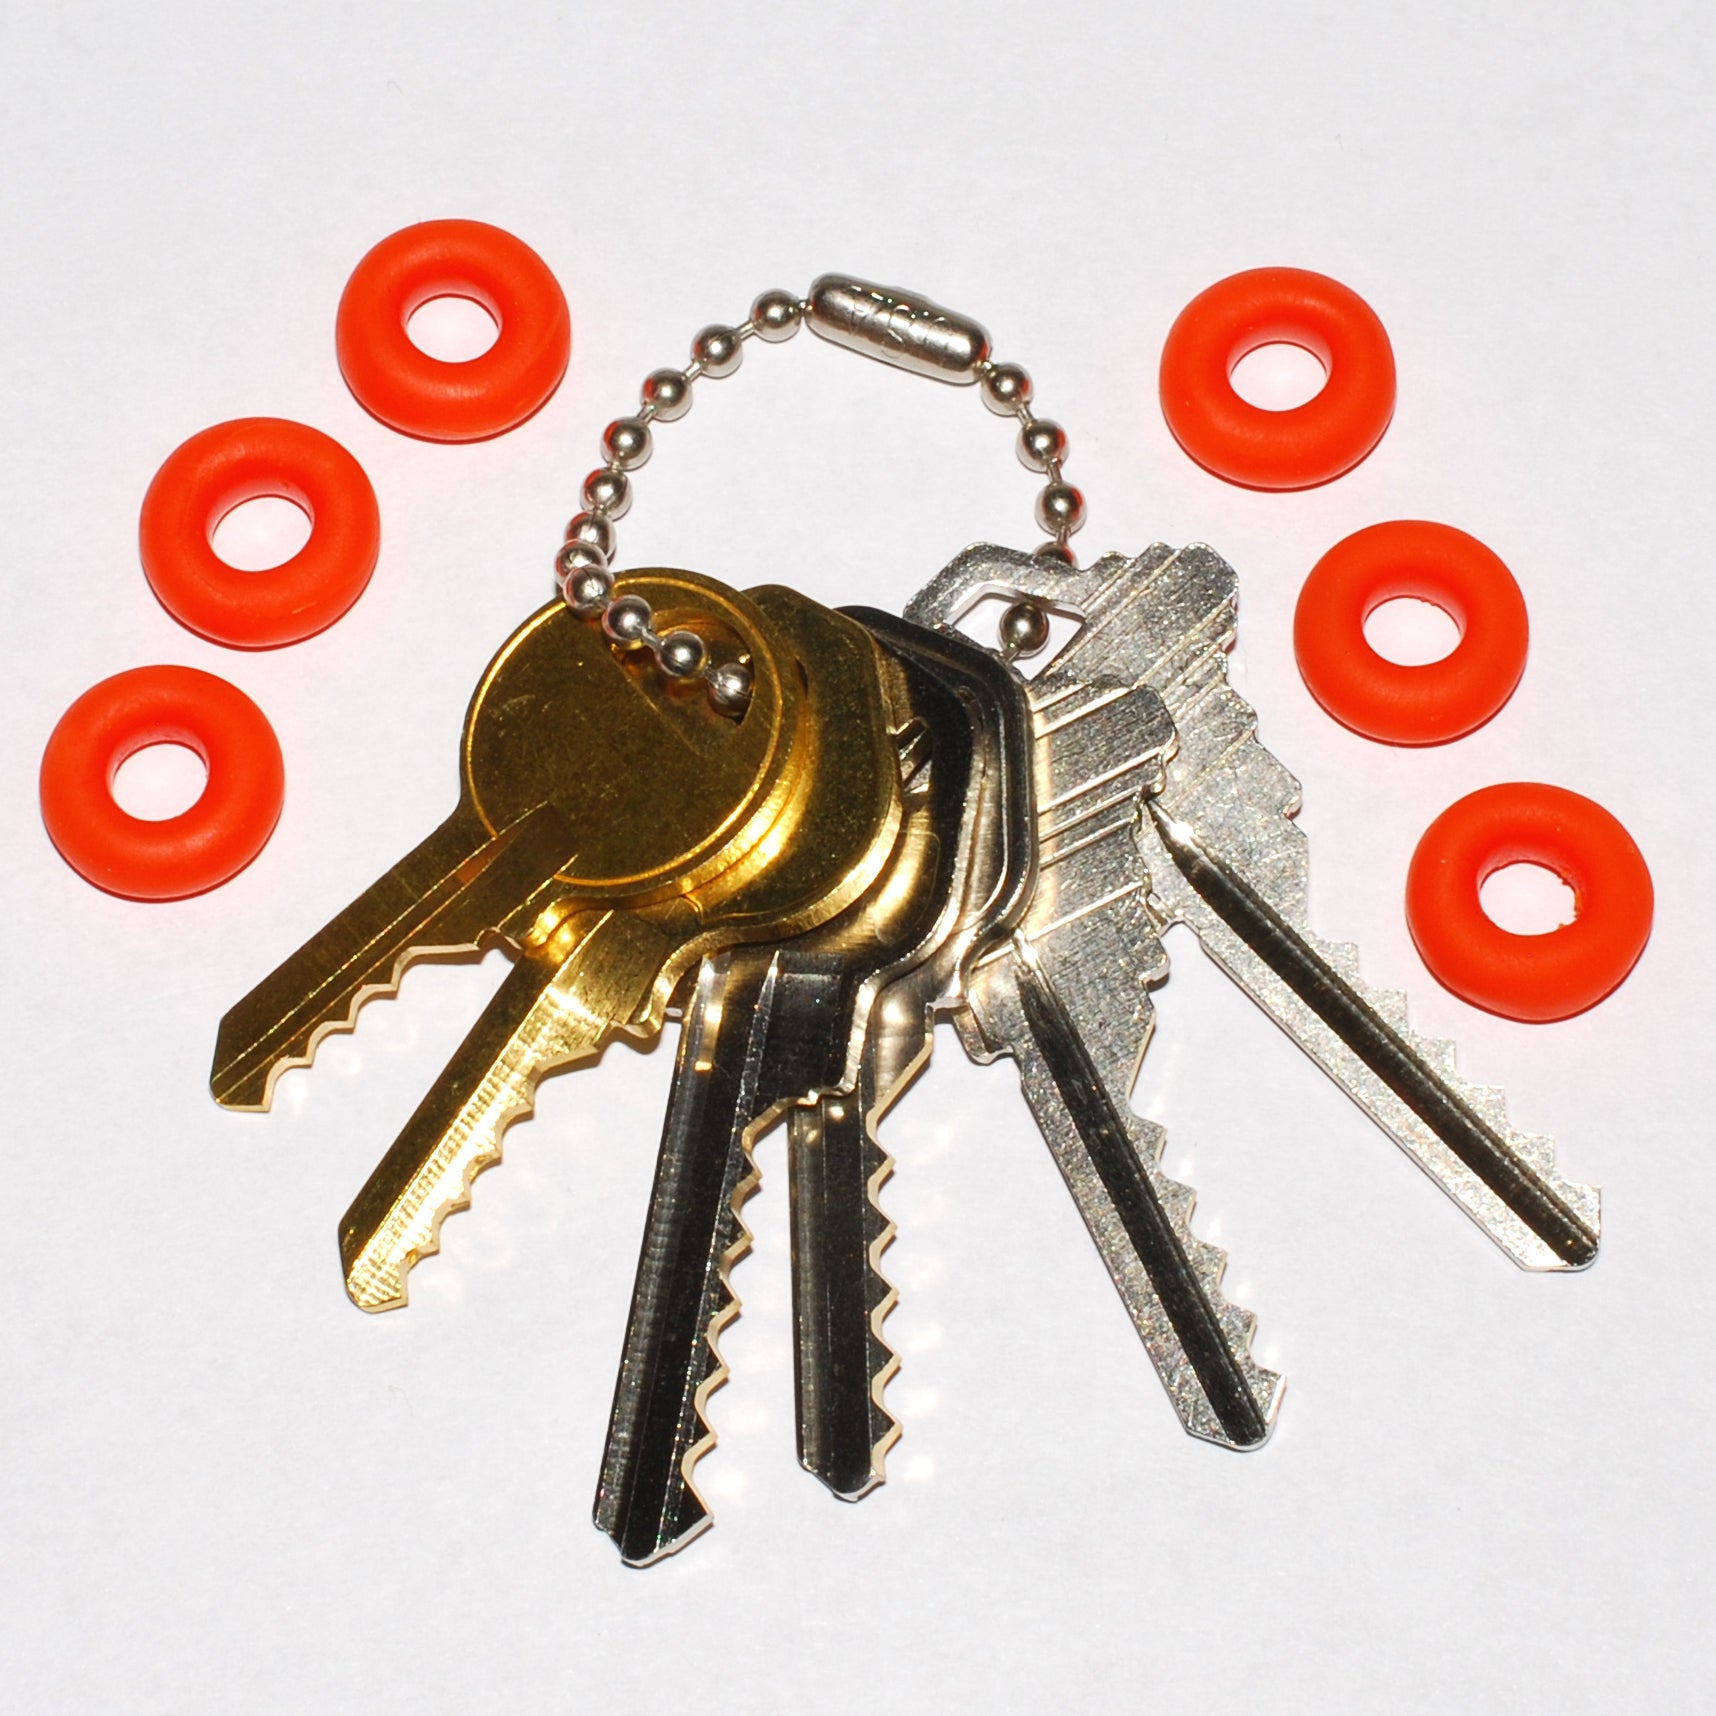 Bump key: Master M1 (4-pin)